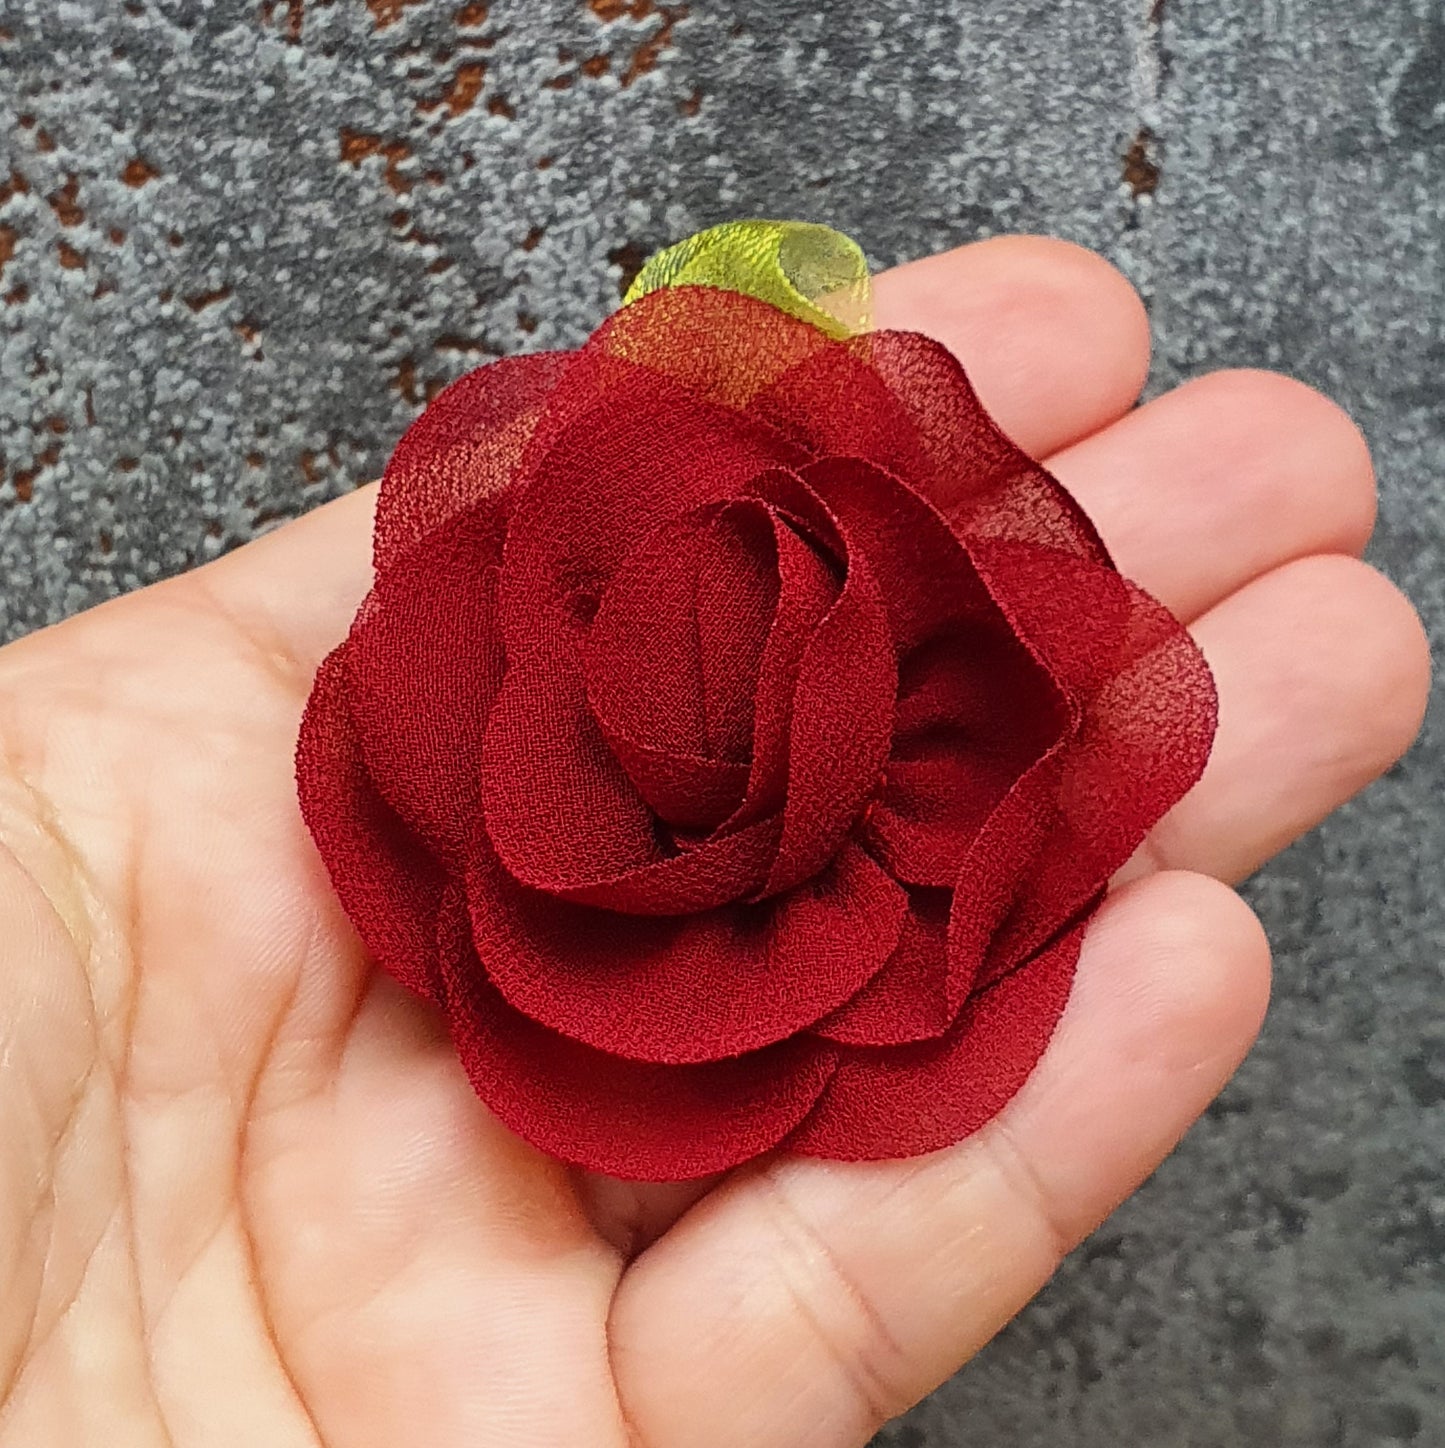 Blume, Rose aus Tüll & Stoff, 45mm, Rot, Applikation, Kreativbedarf